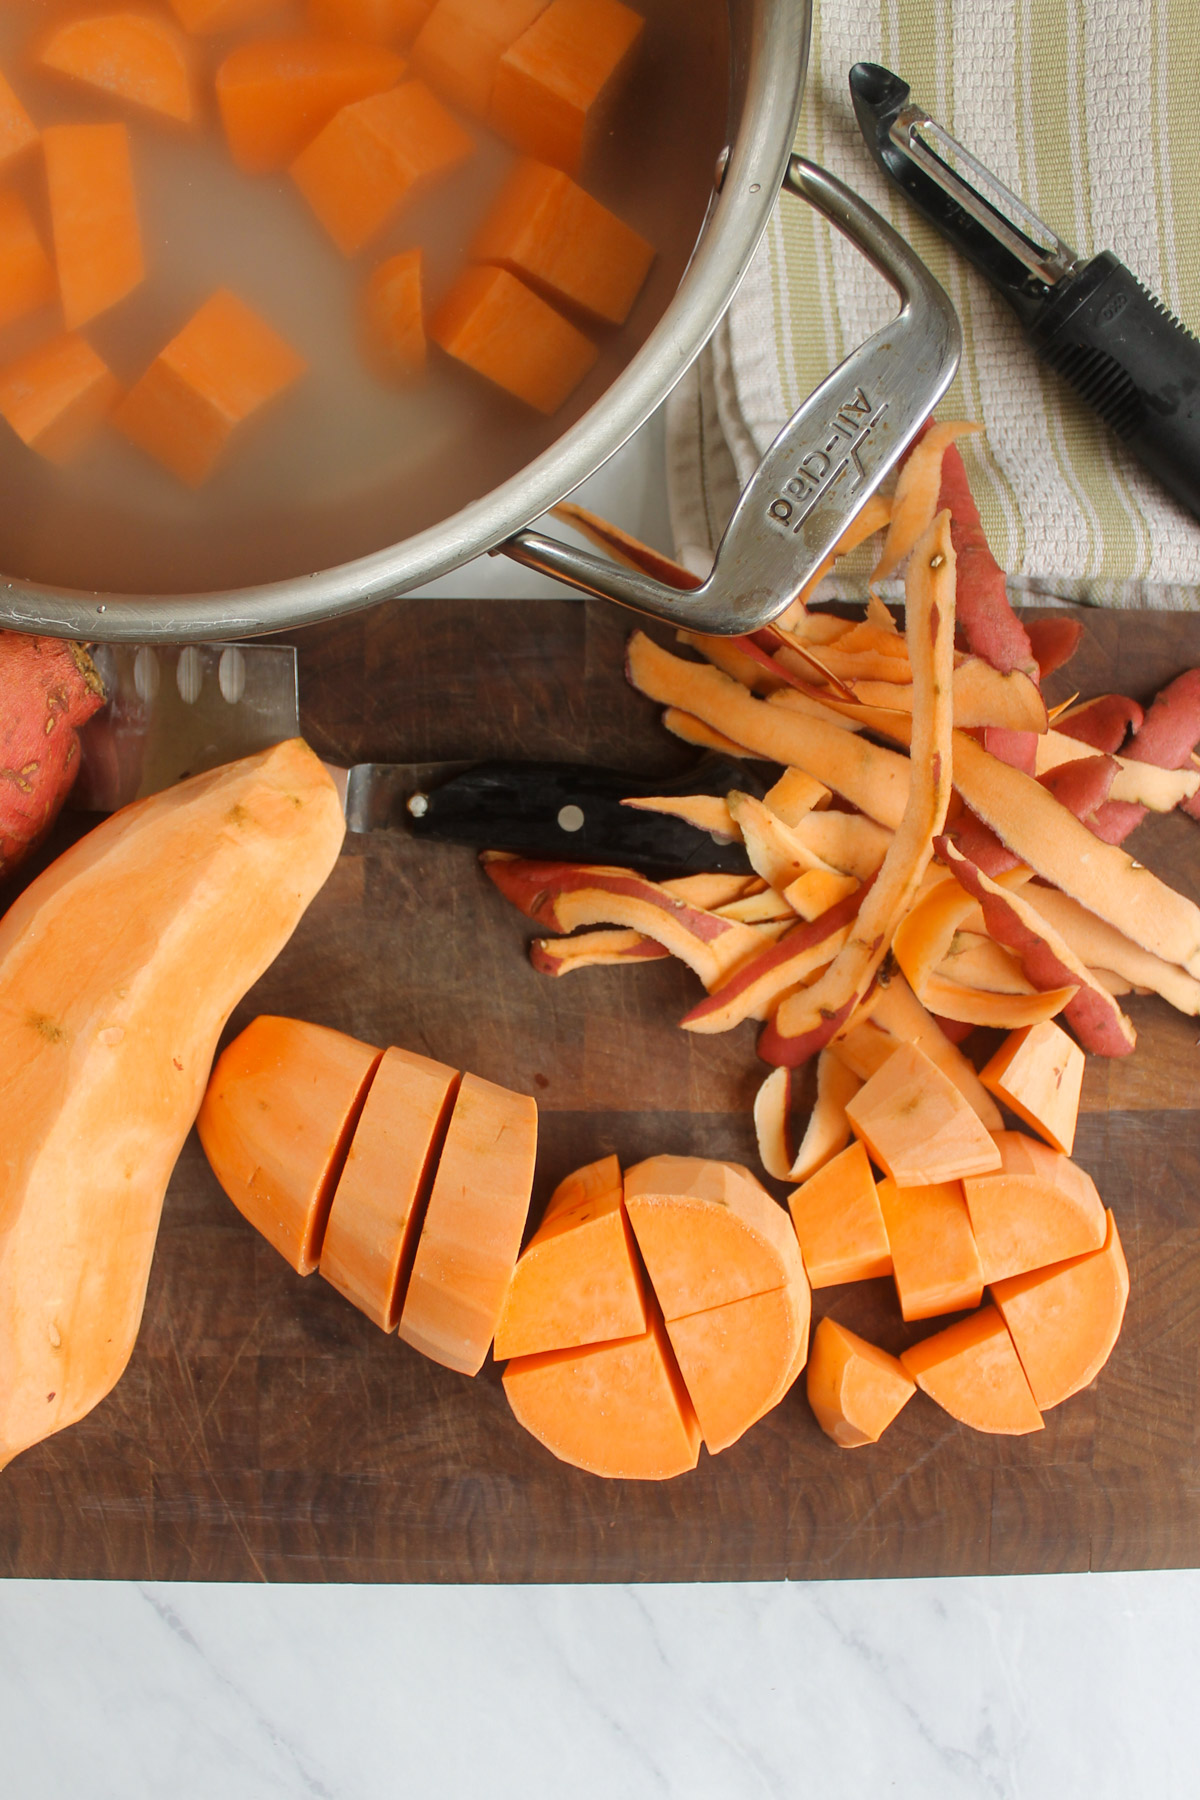 Sweet potatoes peeled and chopped on a cutting board.